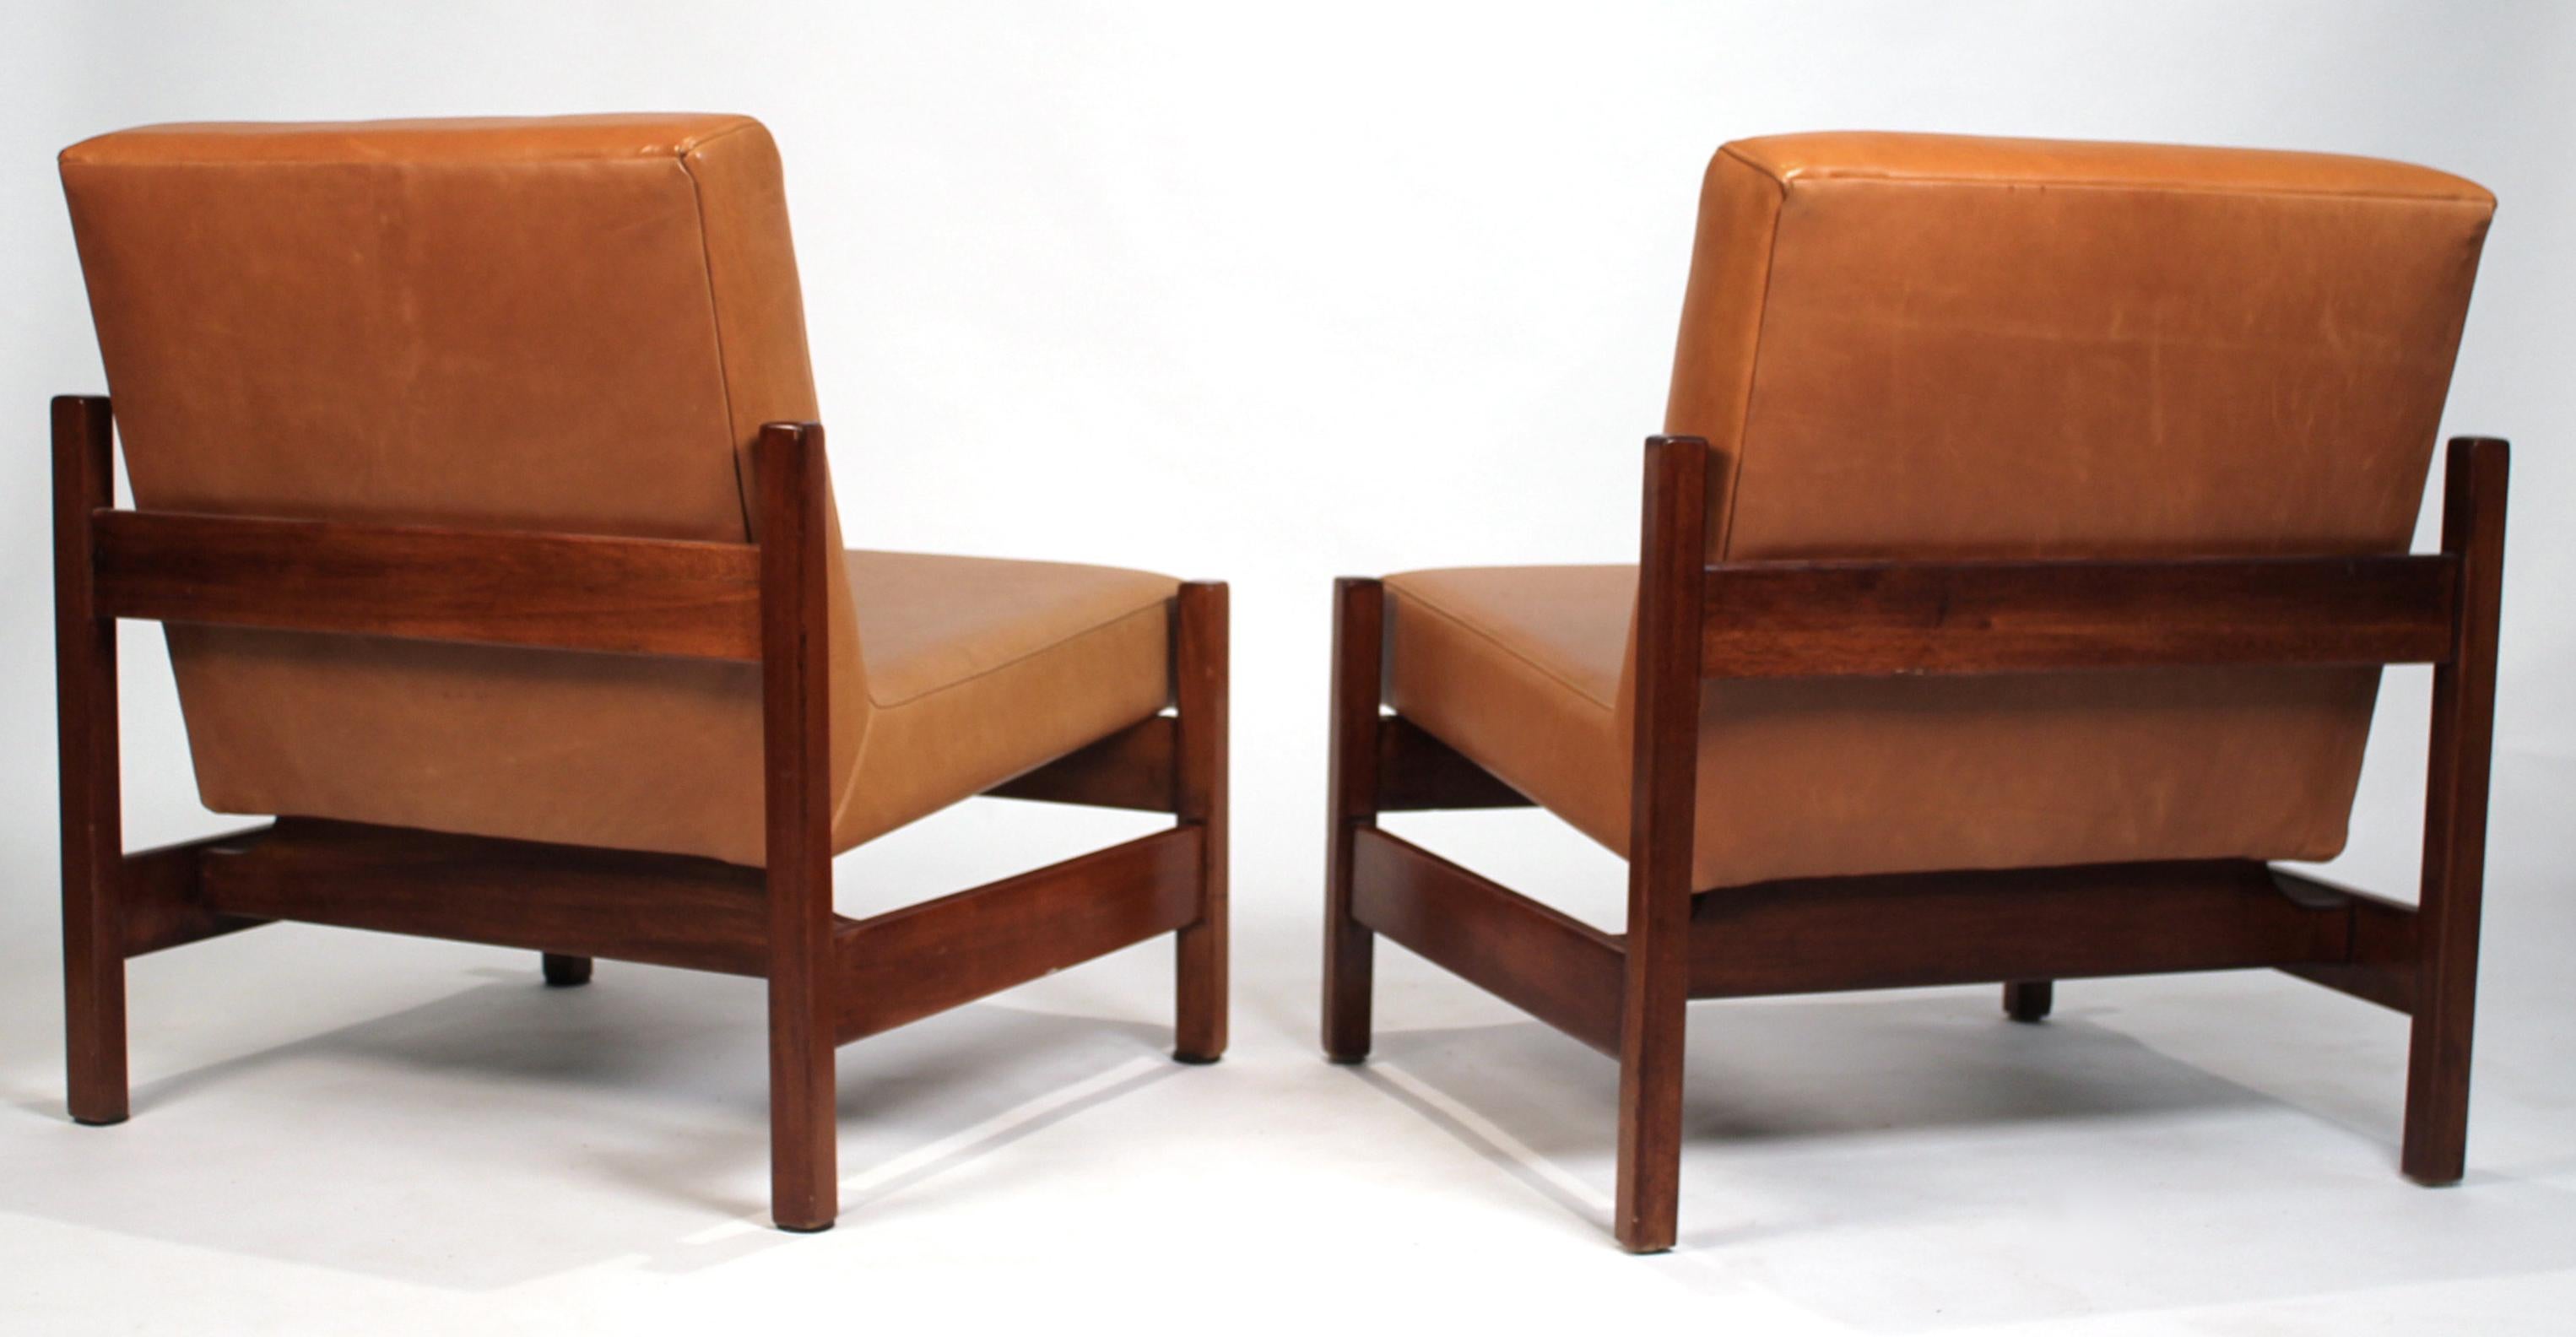 Brazilian Joaquim Tenreiro Style Peroba Lounge Chairs in leather for Knoll & Forma Brazil